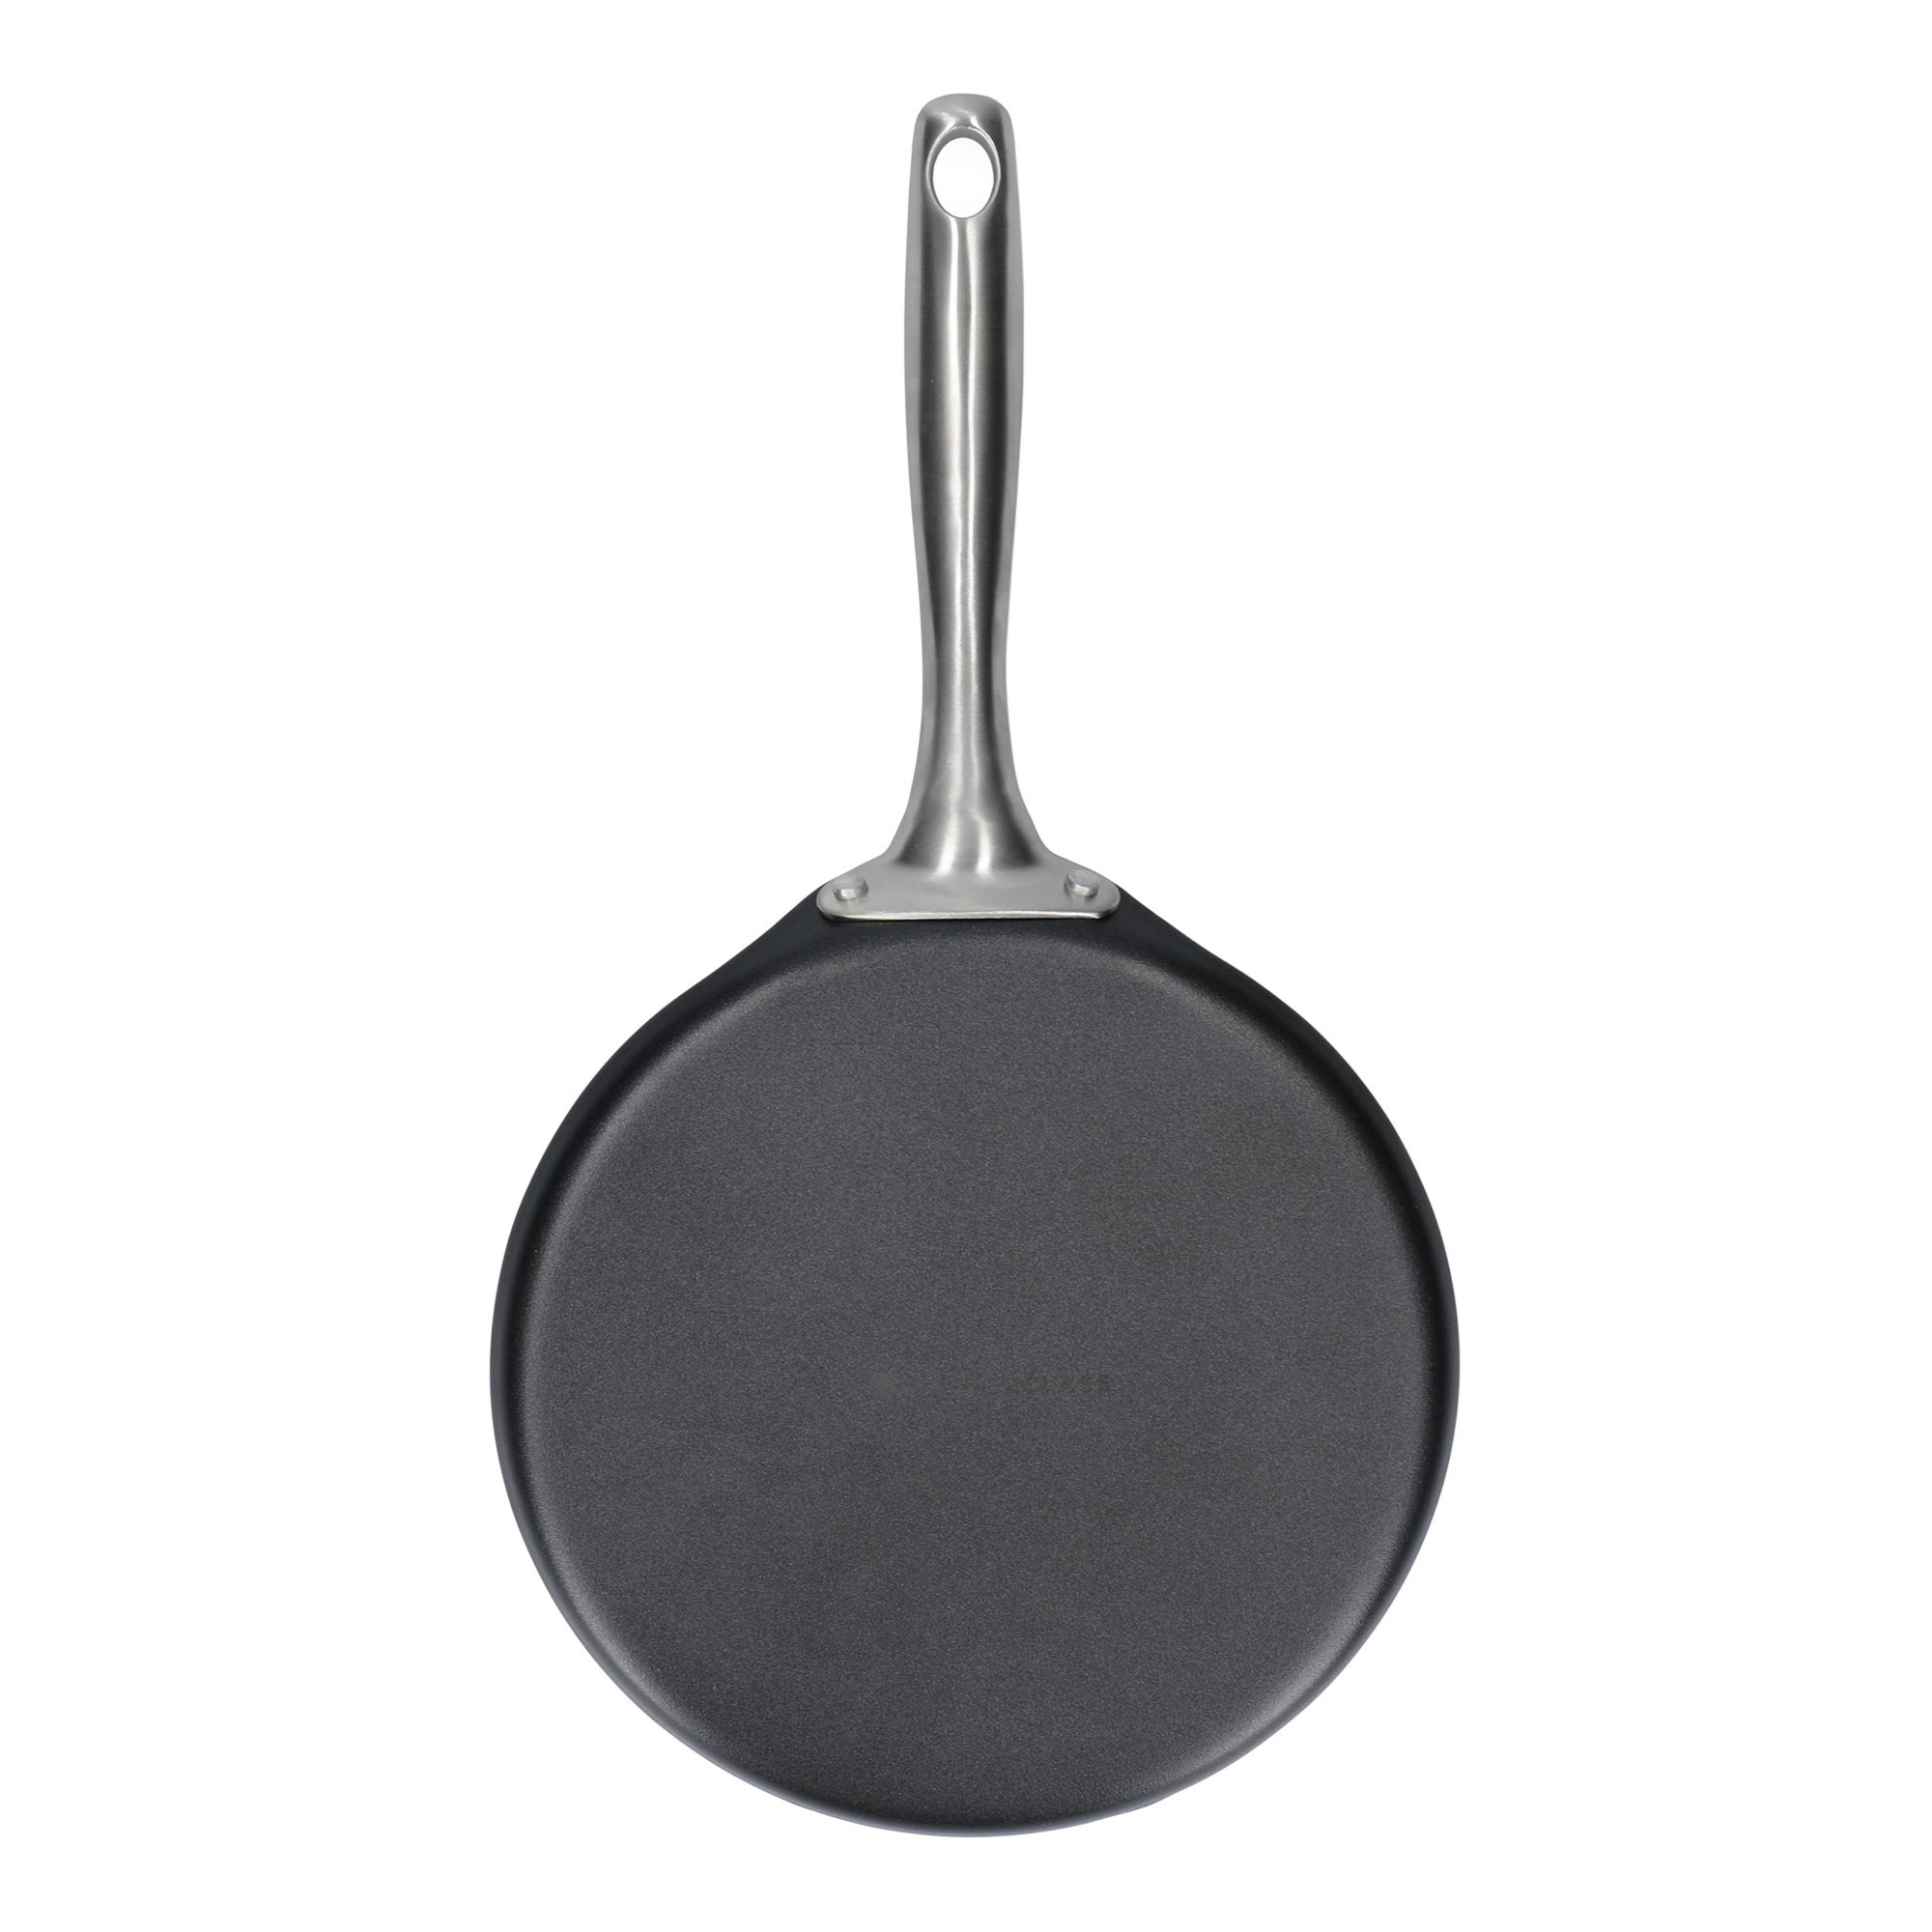 Kitchen Craft Non Stick Frying Pan, Set of 2 (24 cm/28 cm)